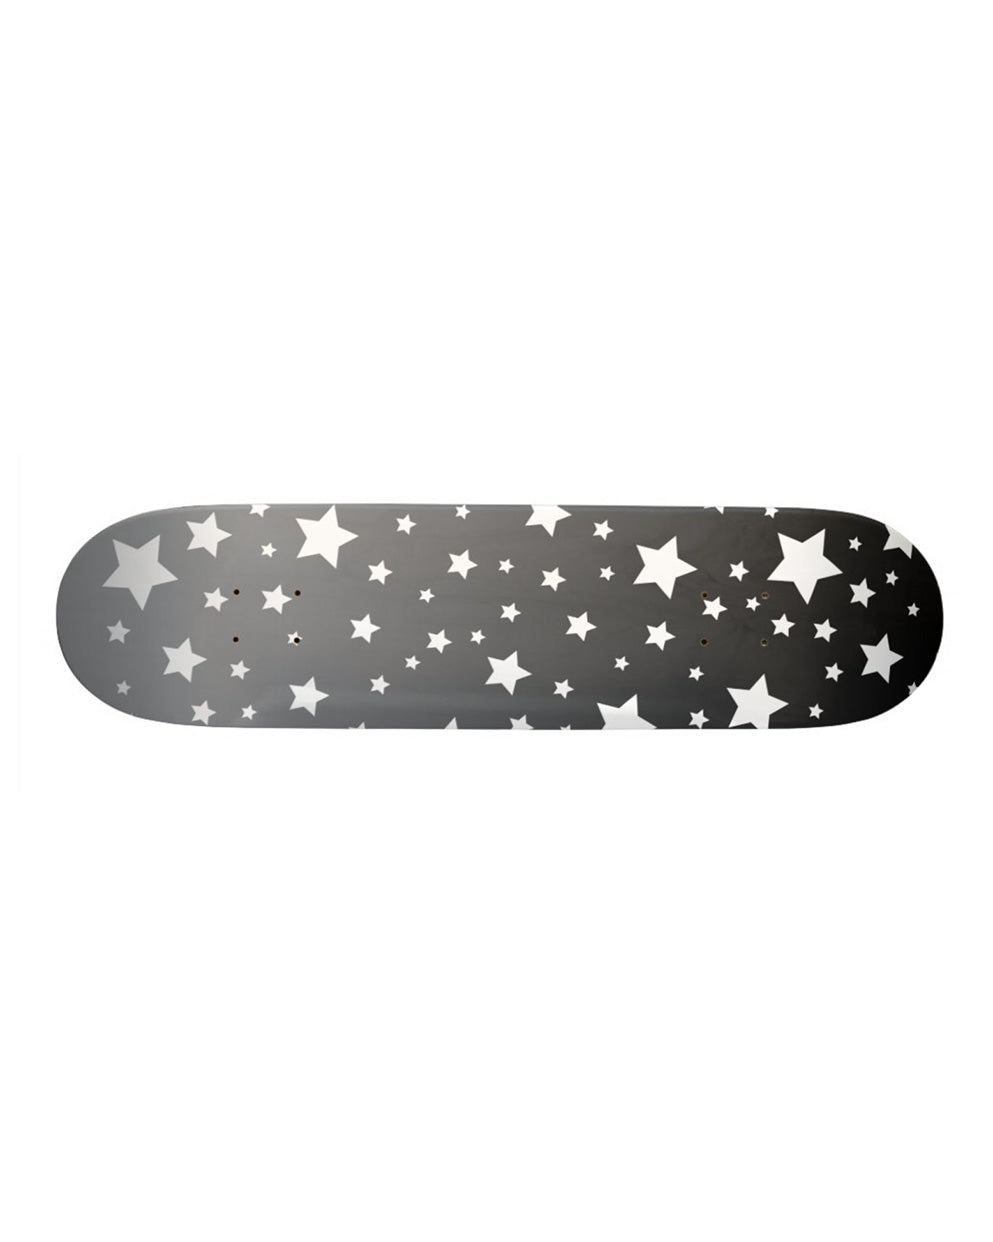 Ombre Stars Skateboard Deck